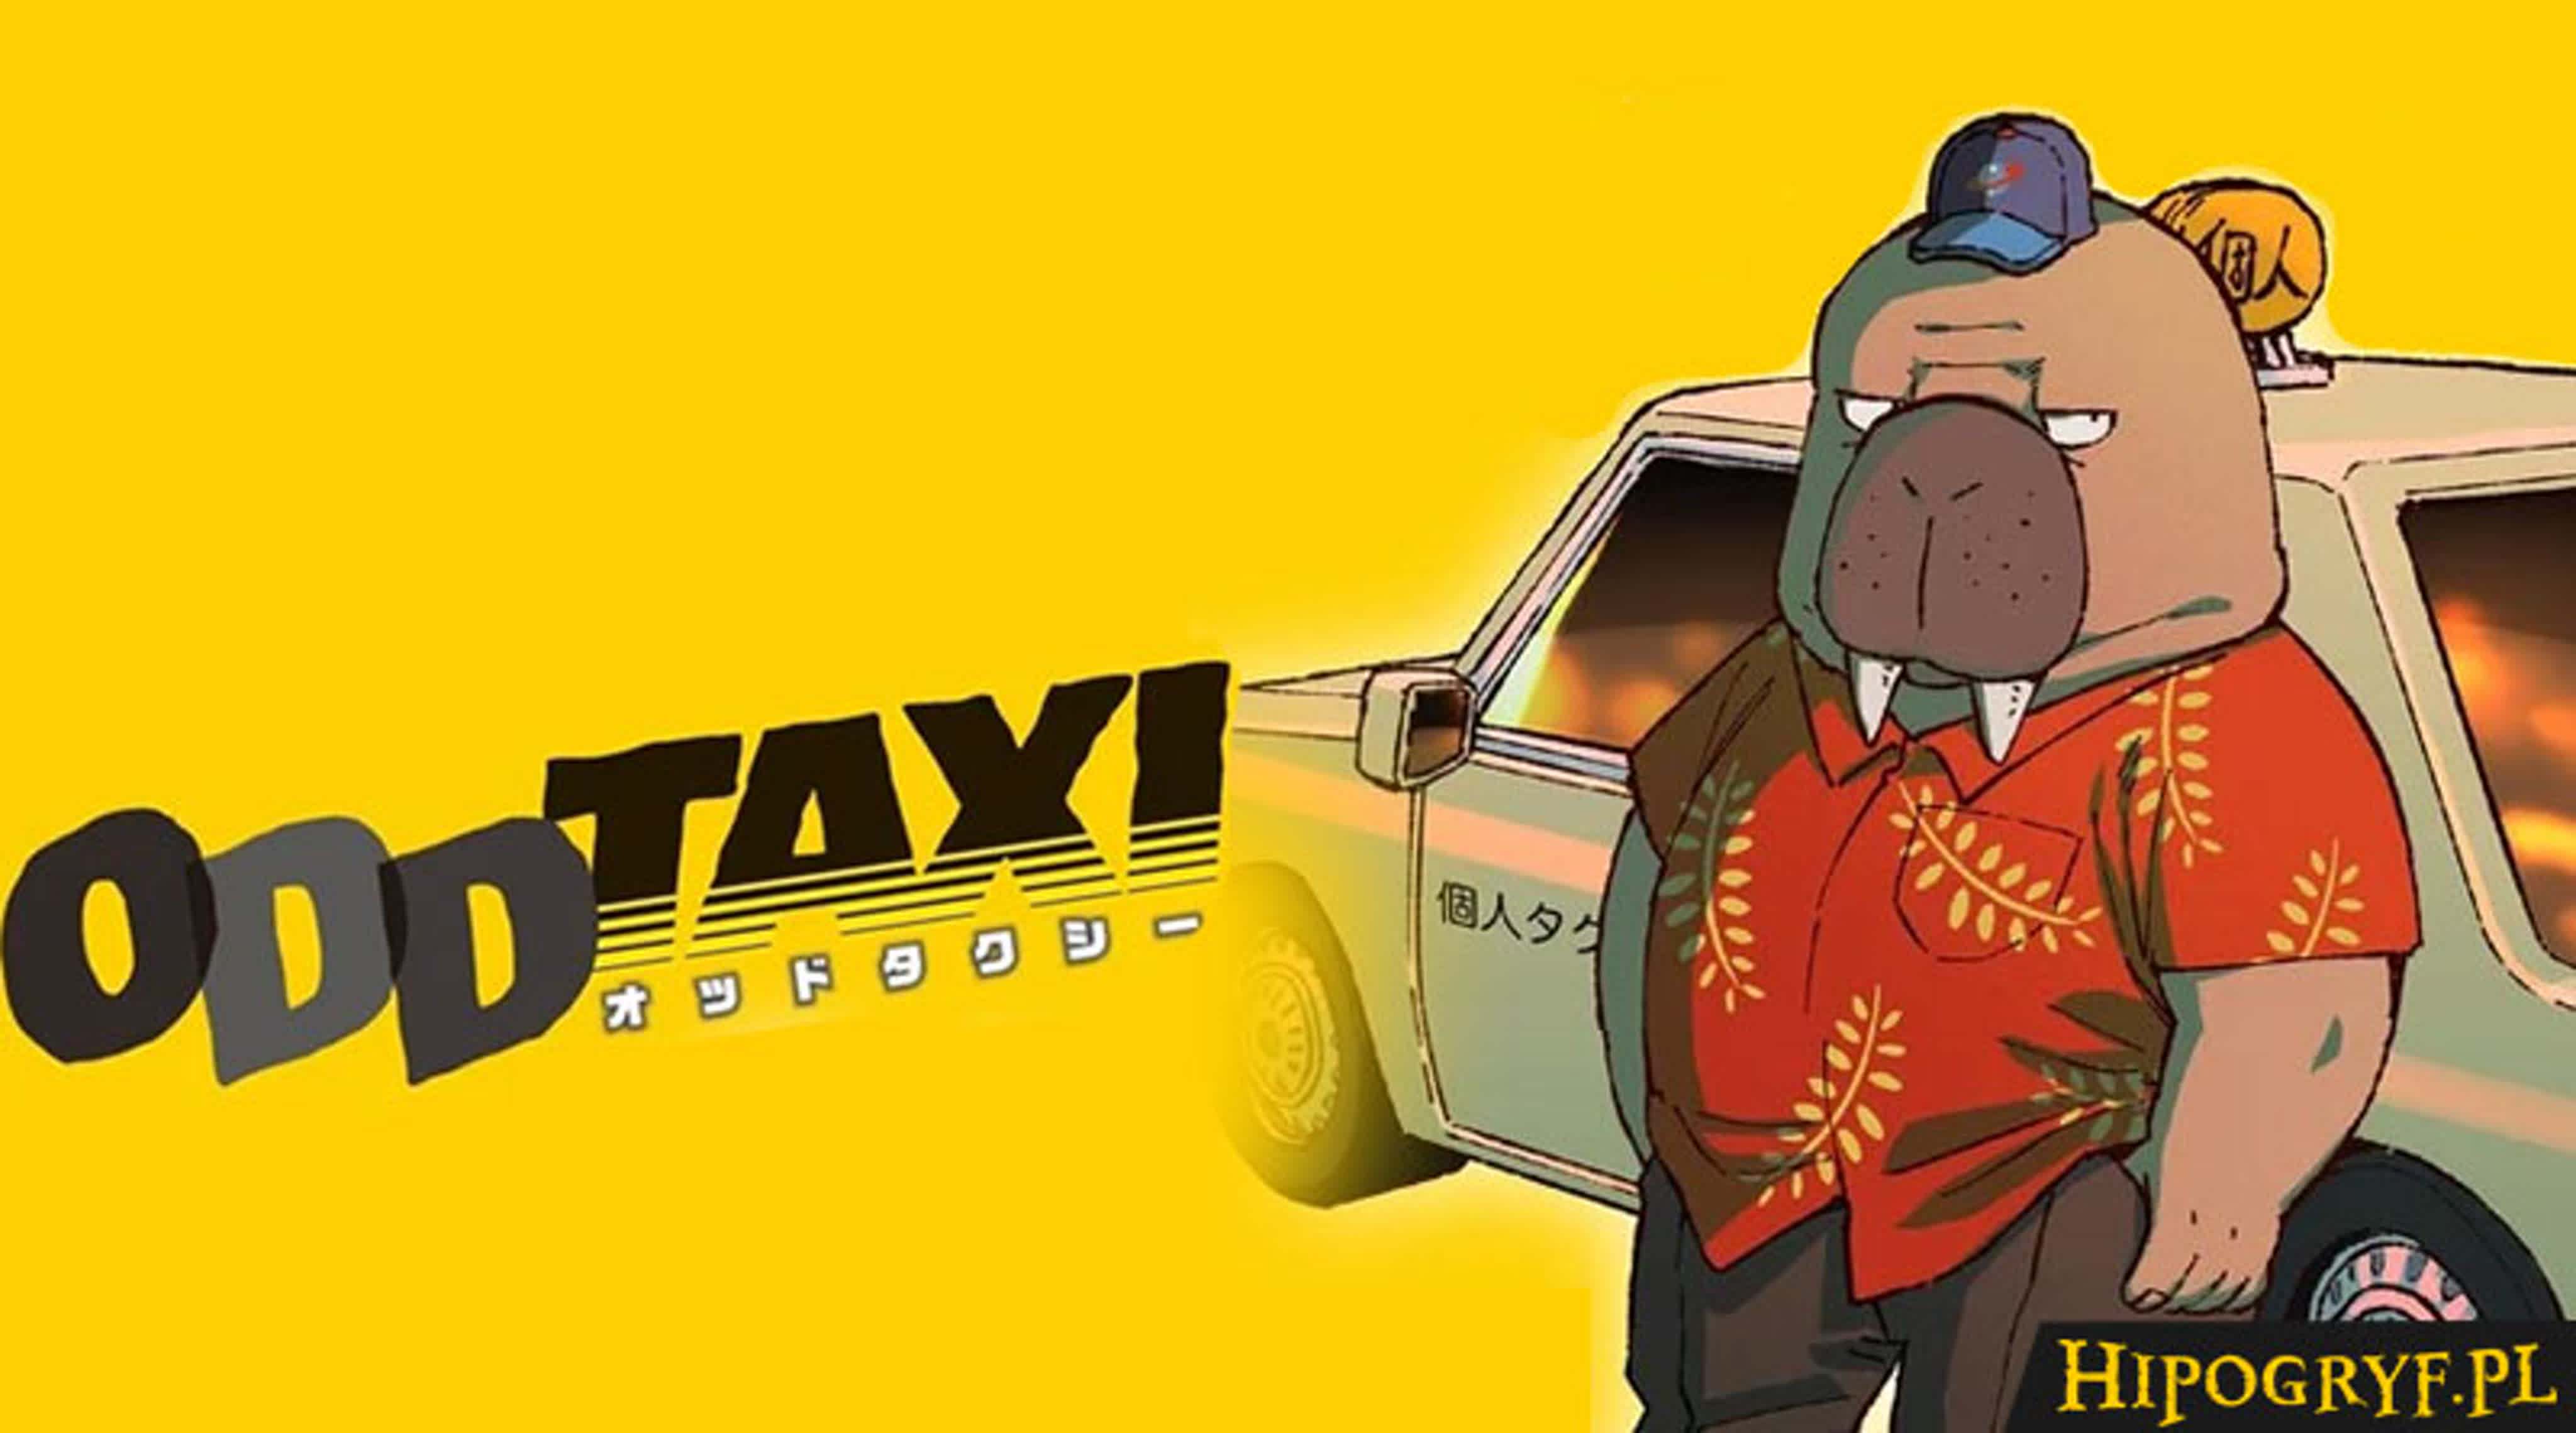 Случайное такси  Odd Taxi